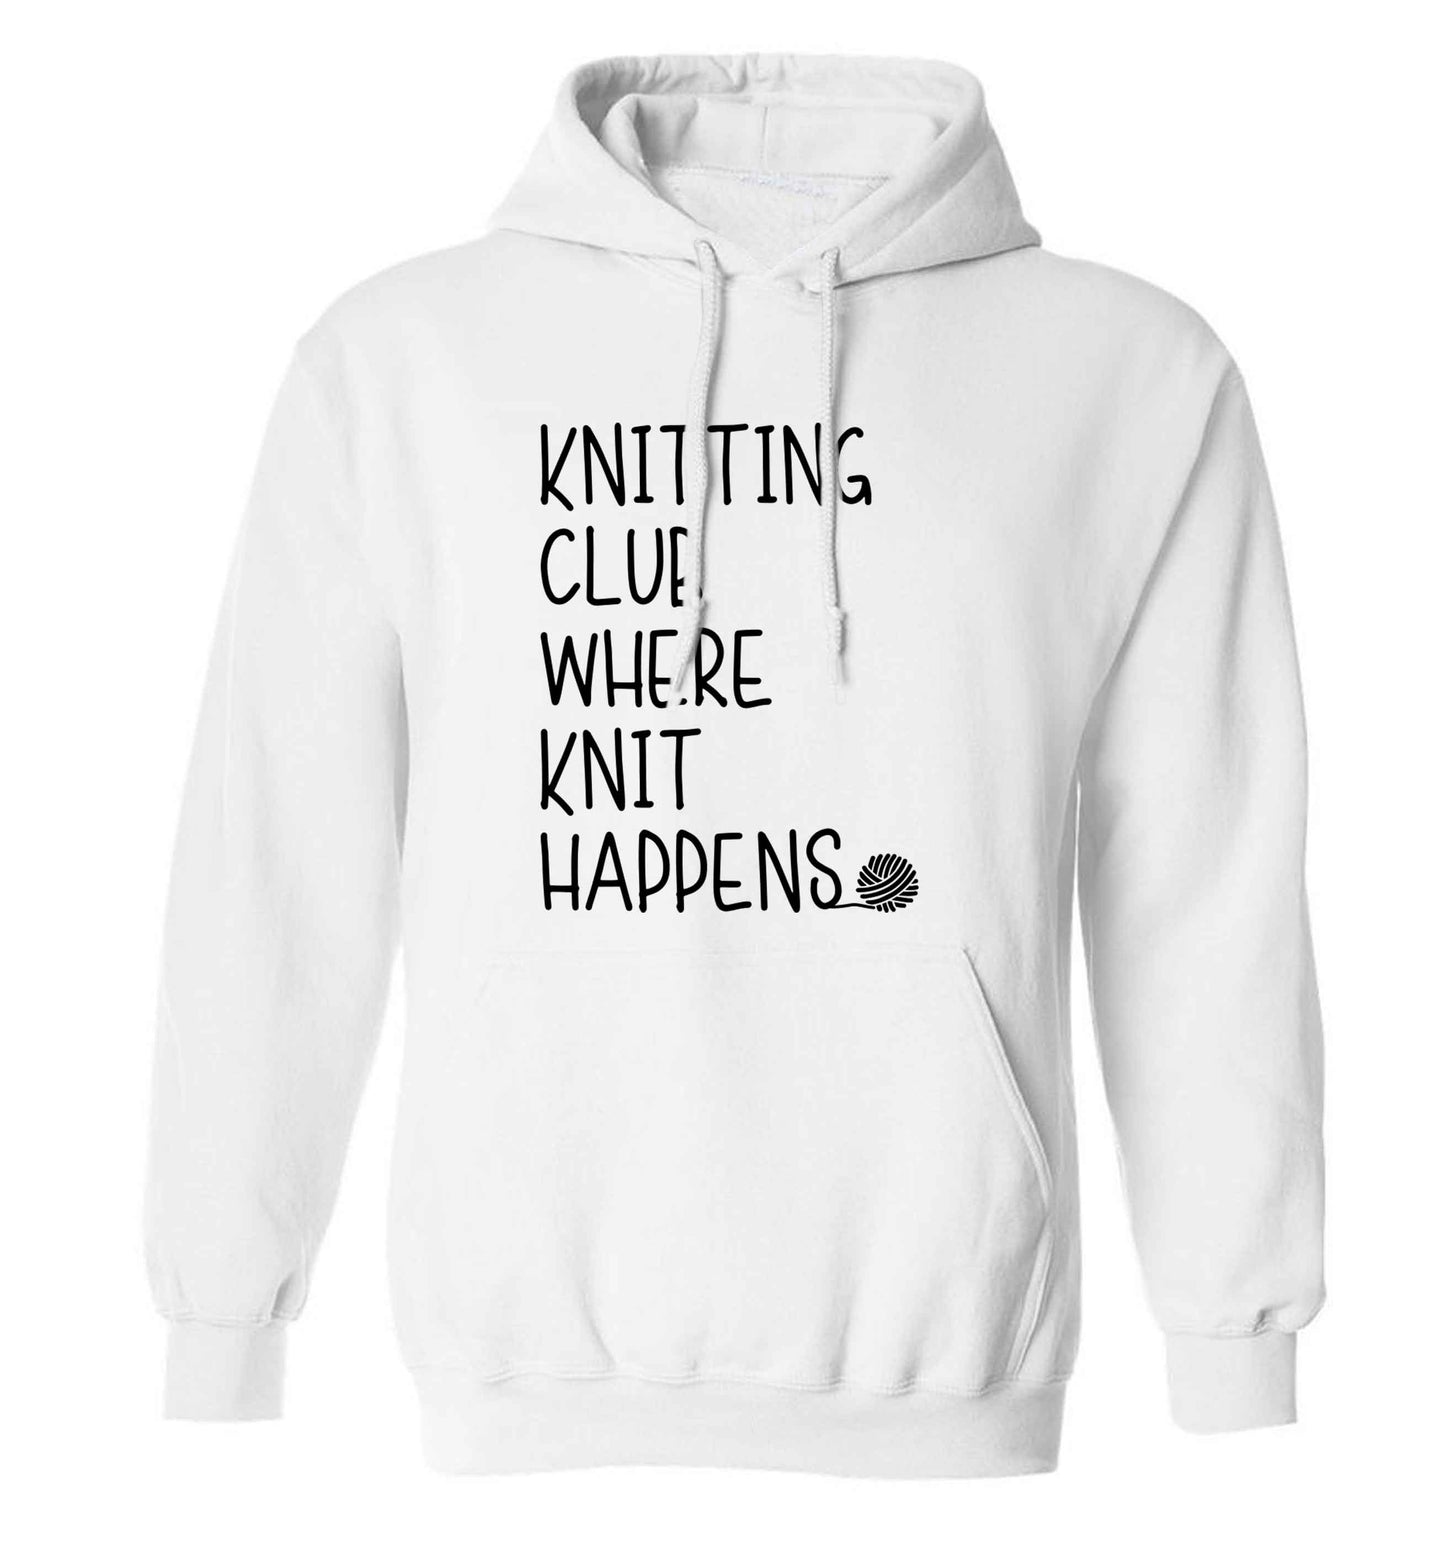 Knitting club where knit happens adults unisex white hoodie 2XL